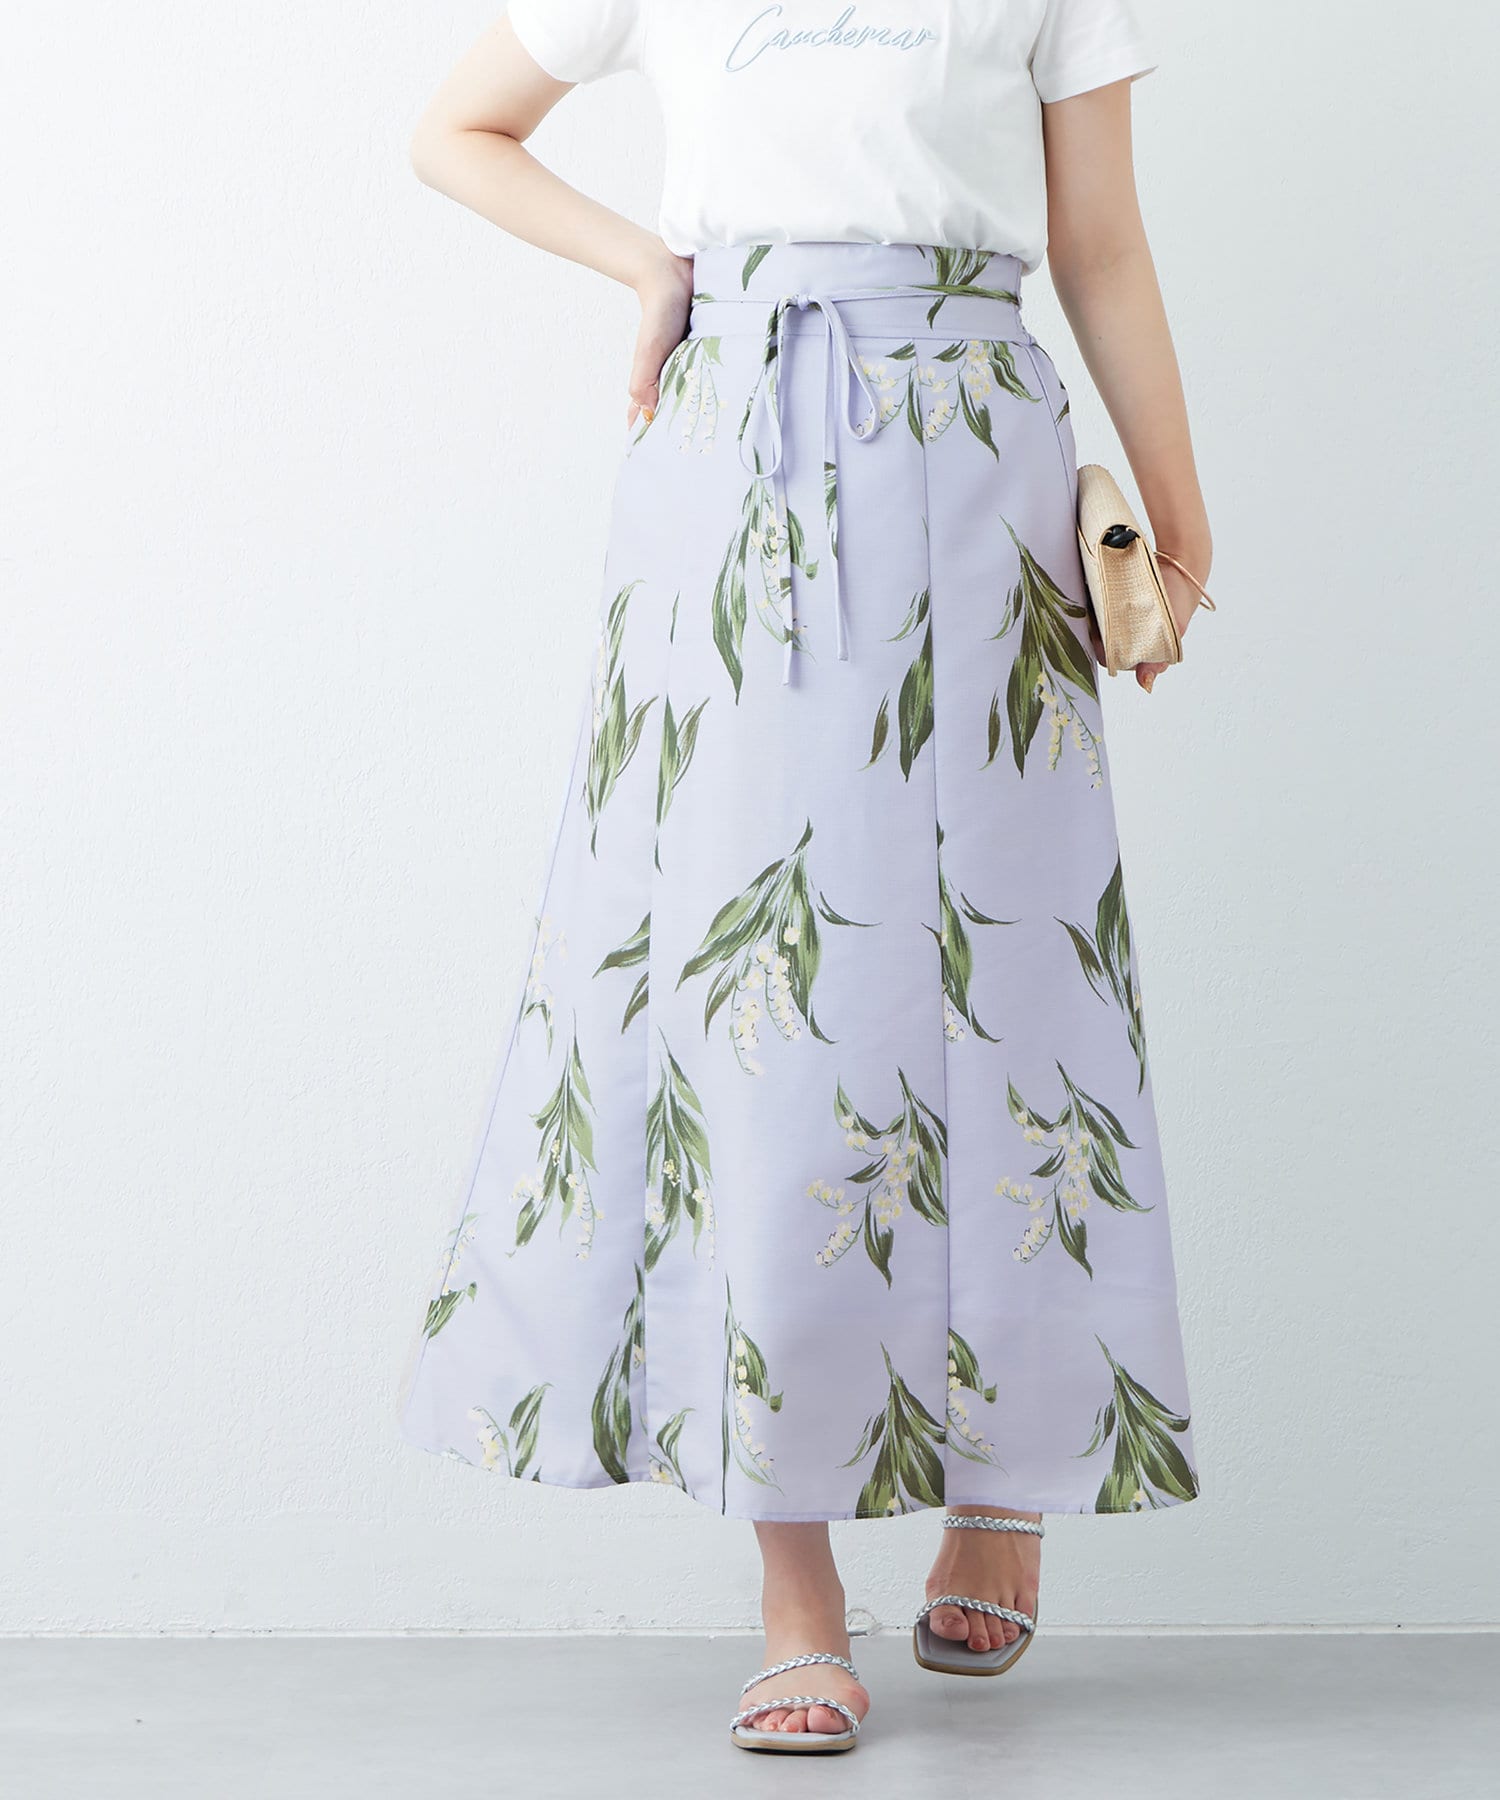 natural couture(ナチュラルクチュール) 長さ変えれるオリジナルすずらん柄スカート